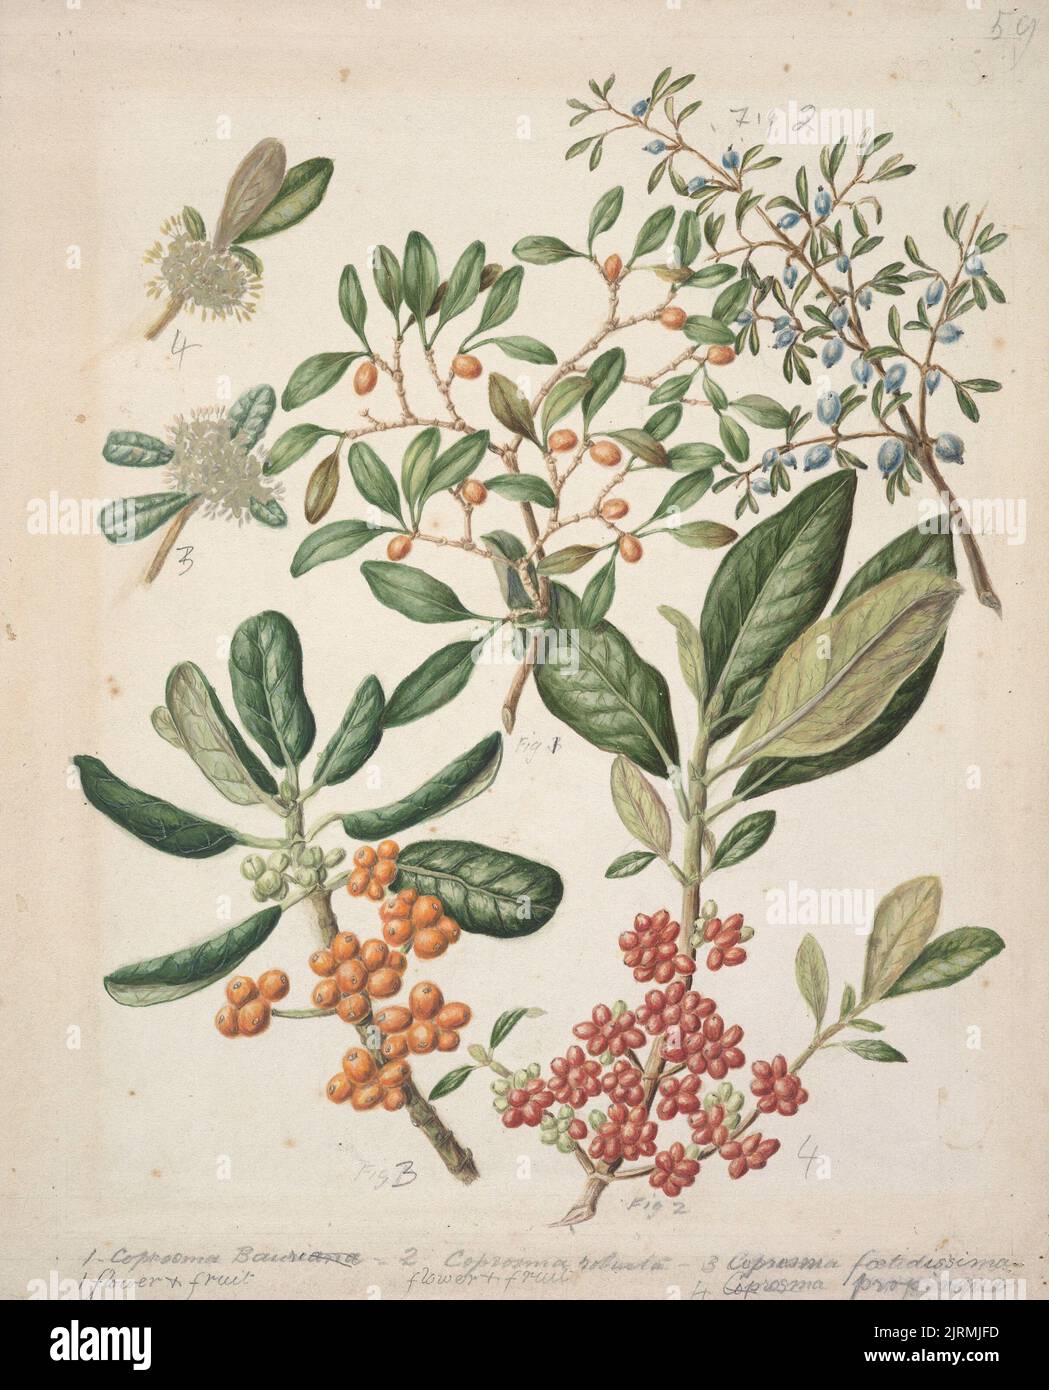 Coprosma repens.(Taupata. Looking glass plant); Coprosma robusta.( Karamu); Coprosma foetidissima.(Stinkwood); Coprosma propinqua.(Mingimingi)., circa 1885, New Zealand, by Sarah Featon. Stock Photo